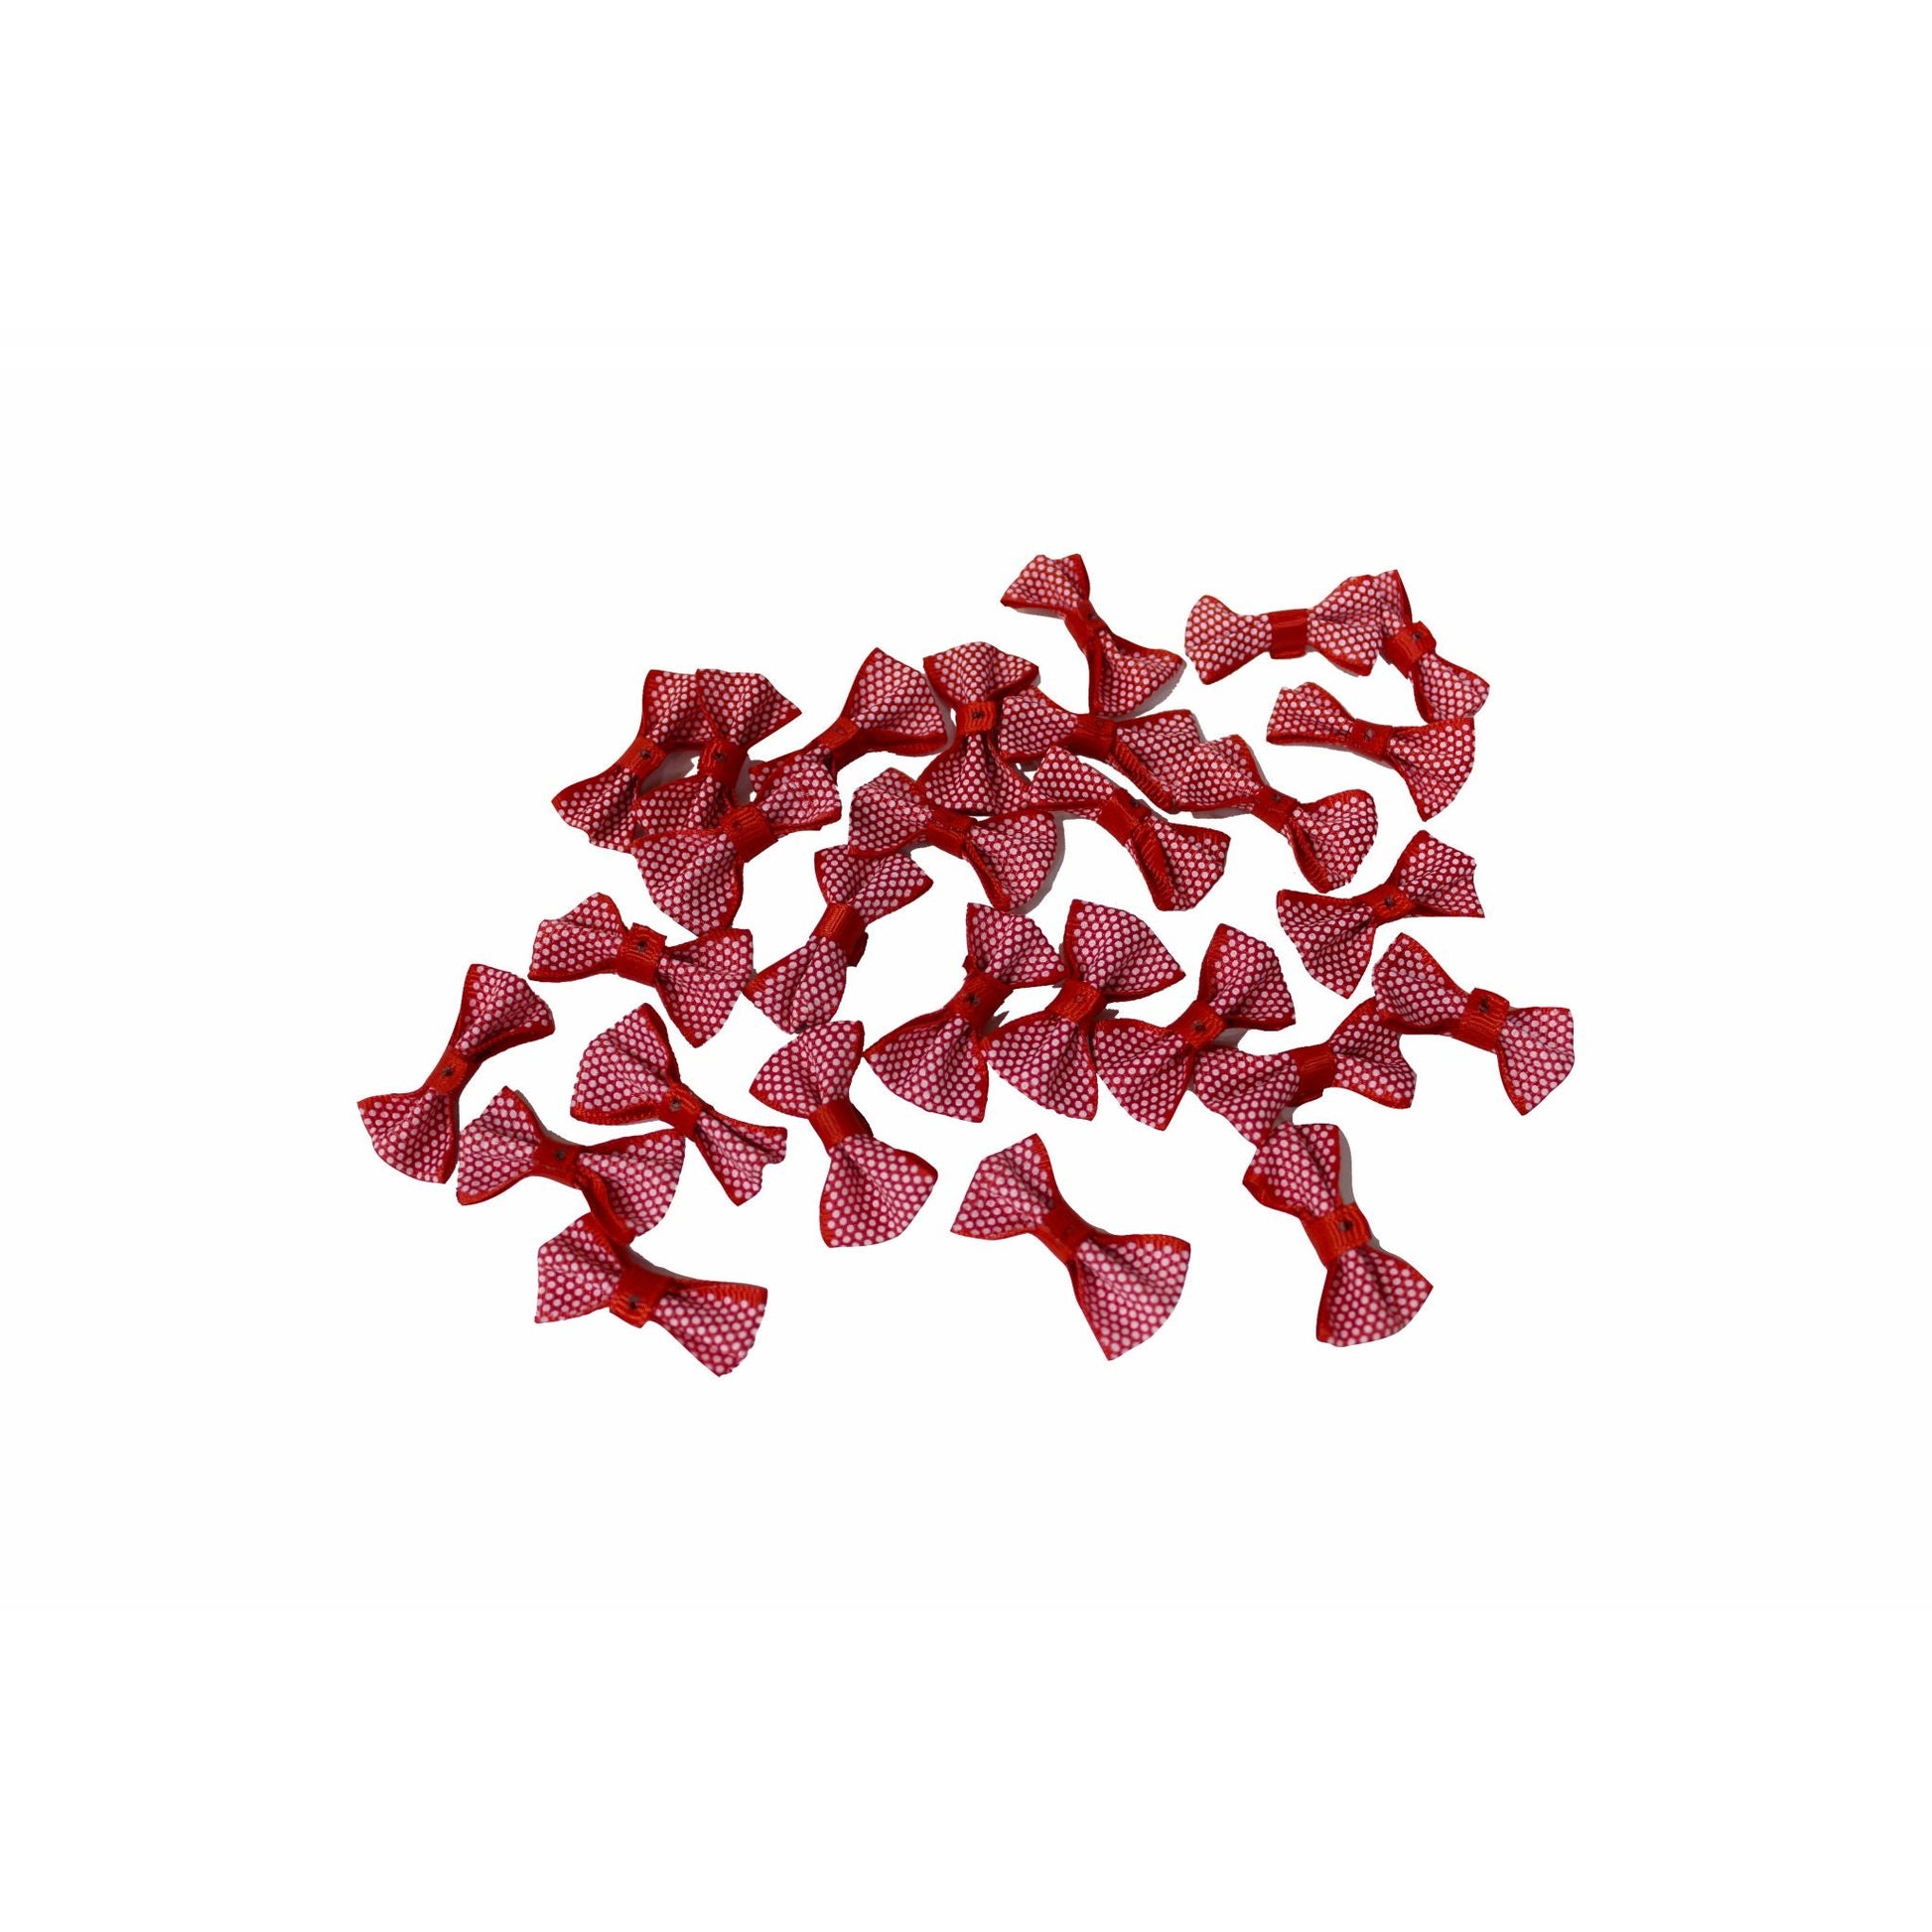 Indian Petals Cute Small Polka-dot Ribbon Bow Cabochons Motif for Craft or Decoration - 12468, Red